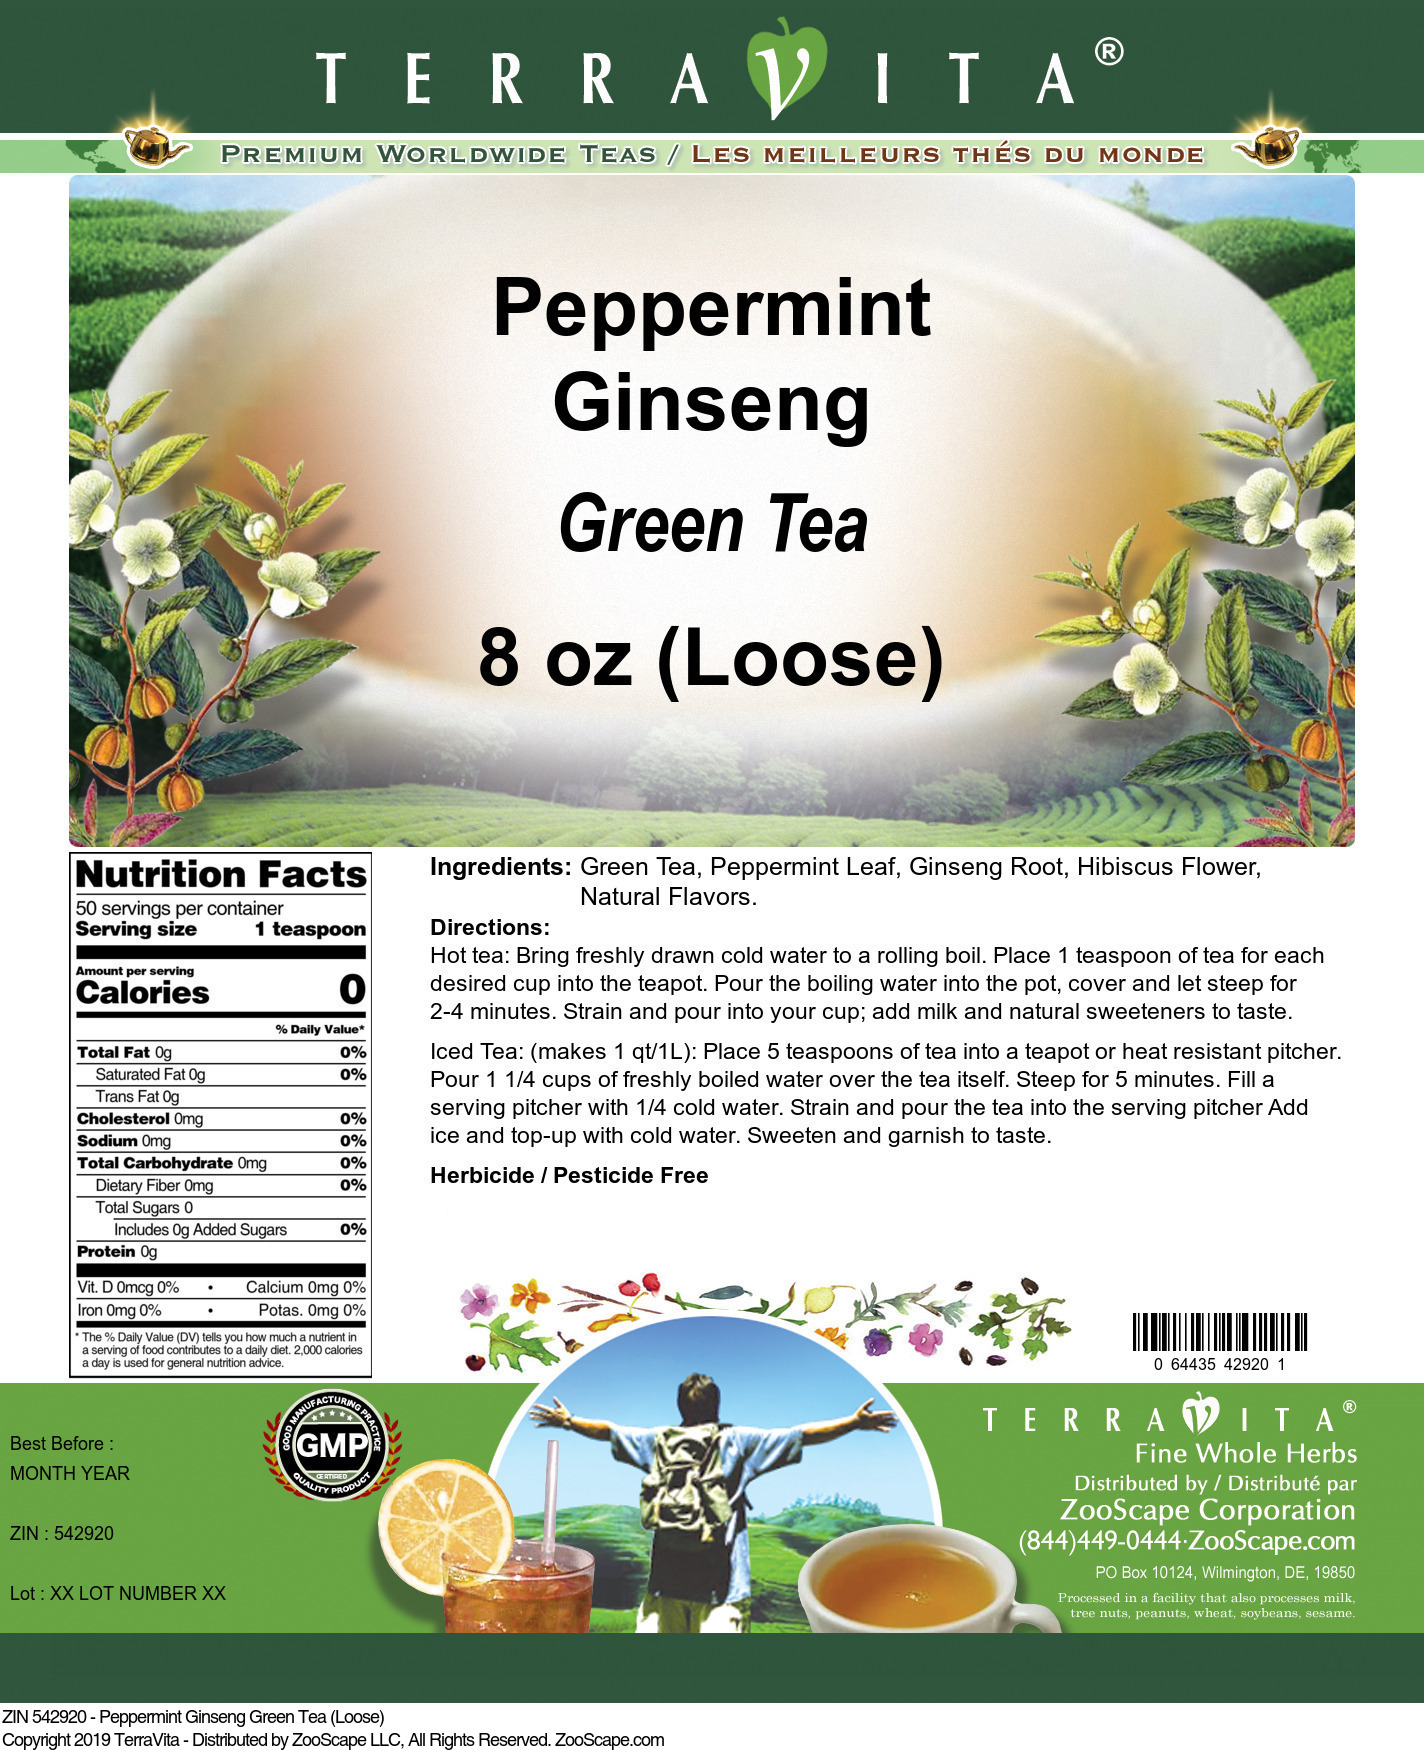 Peppermint Ginseng Green Tea (Loose) - Label